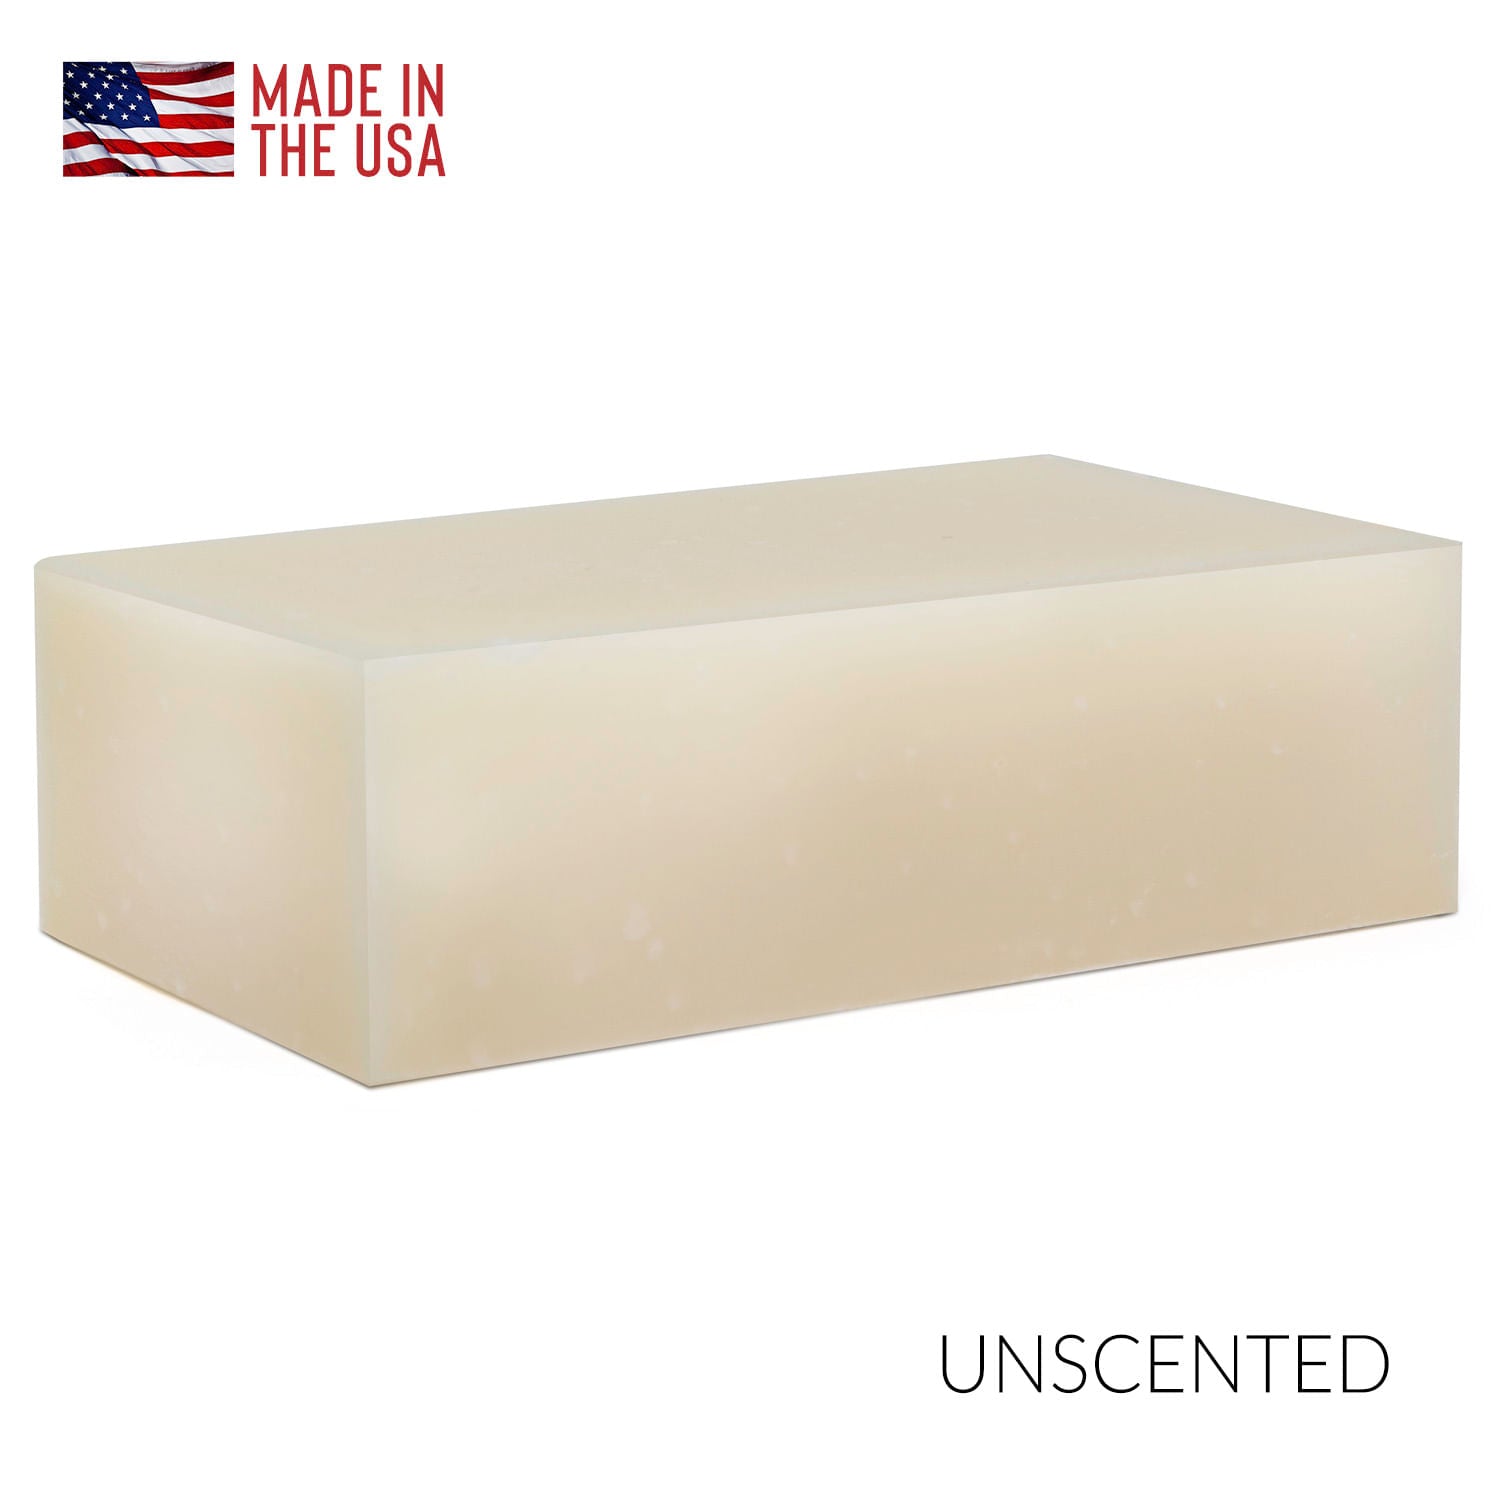 Unscented bar soap